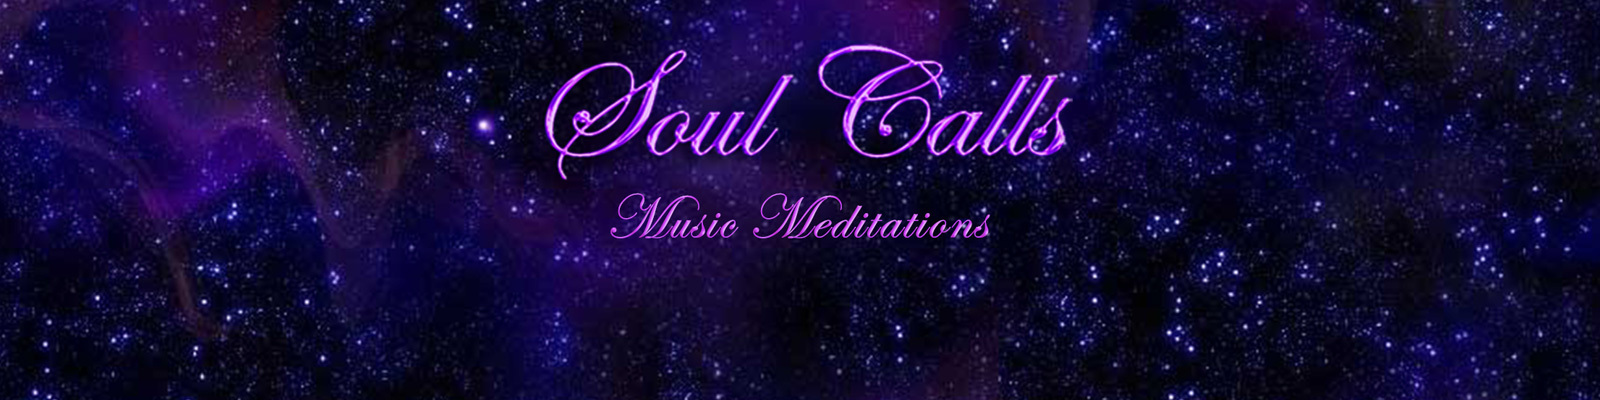 The Soul Calls Music Meditations Podcast